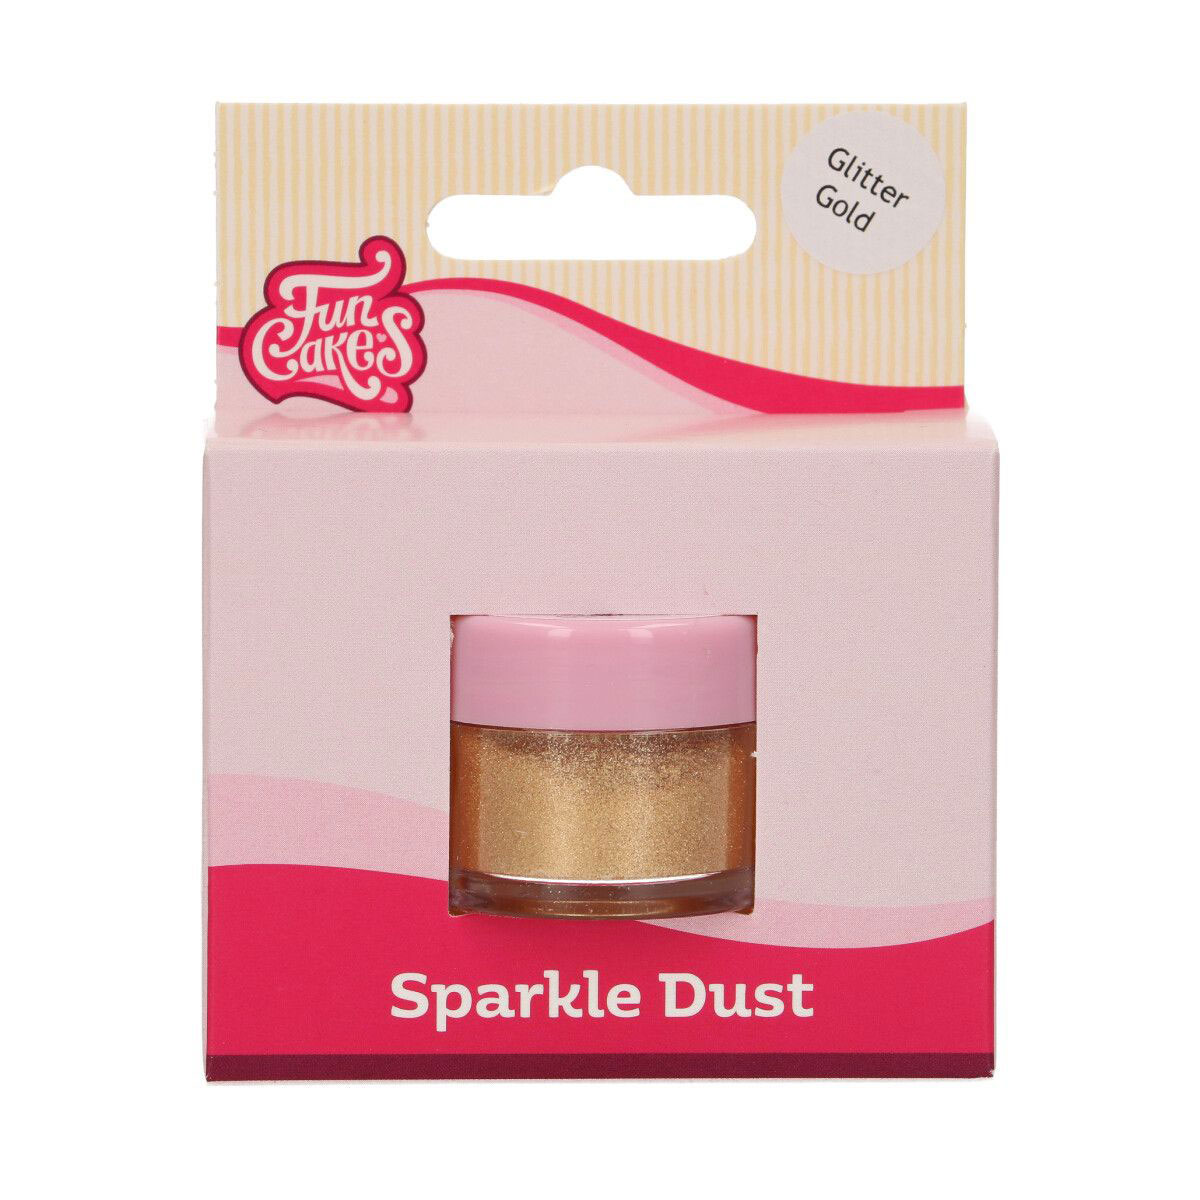 Funcakes Edible Sparkle Dust - Glitter Gold